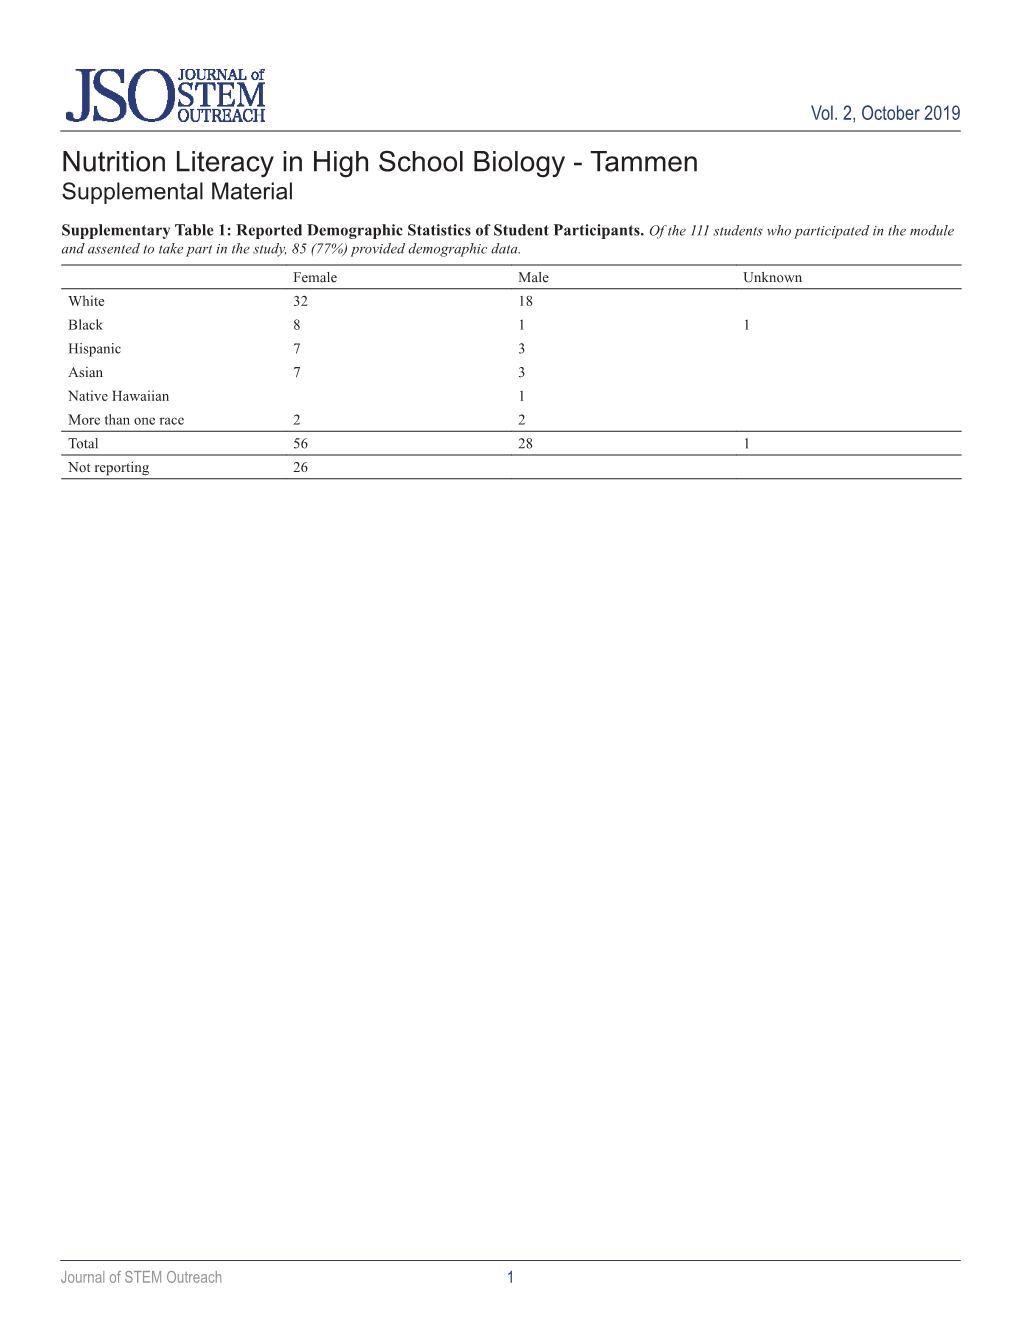 Nutrition Literacy in High School Biology - Tammen Supplemental Material